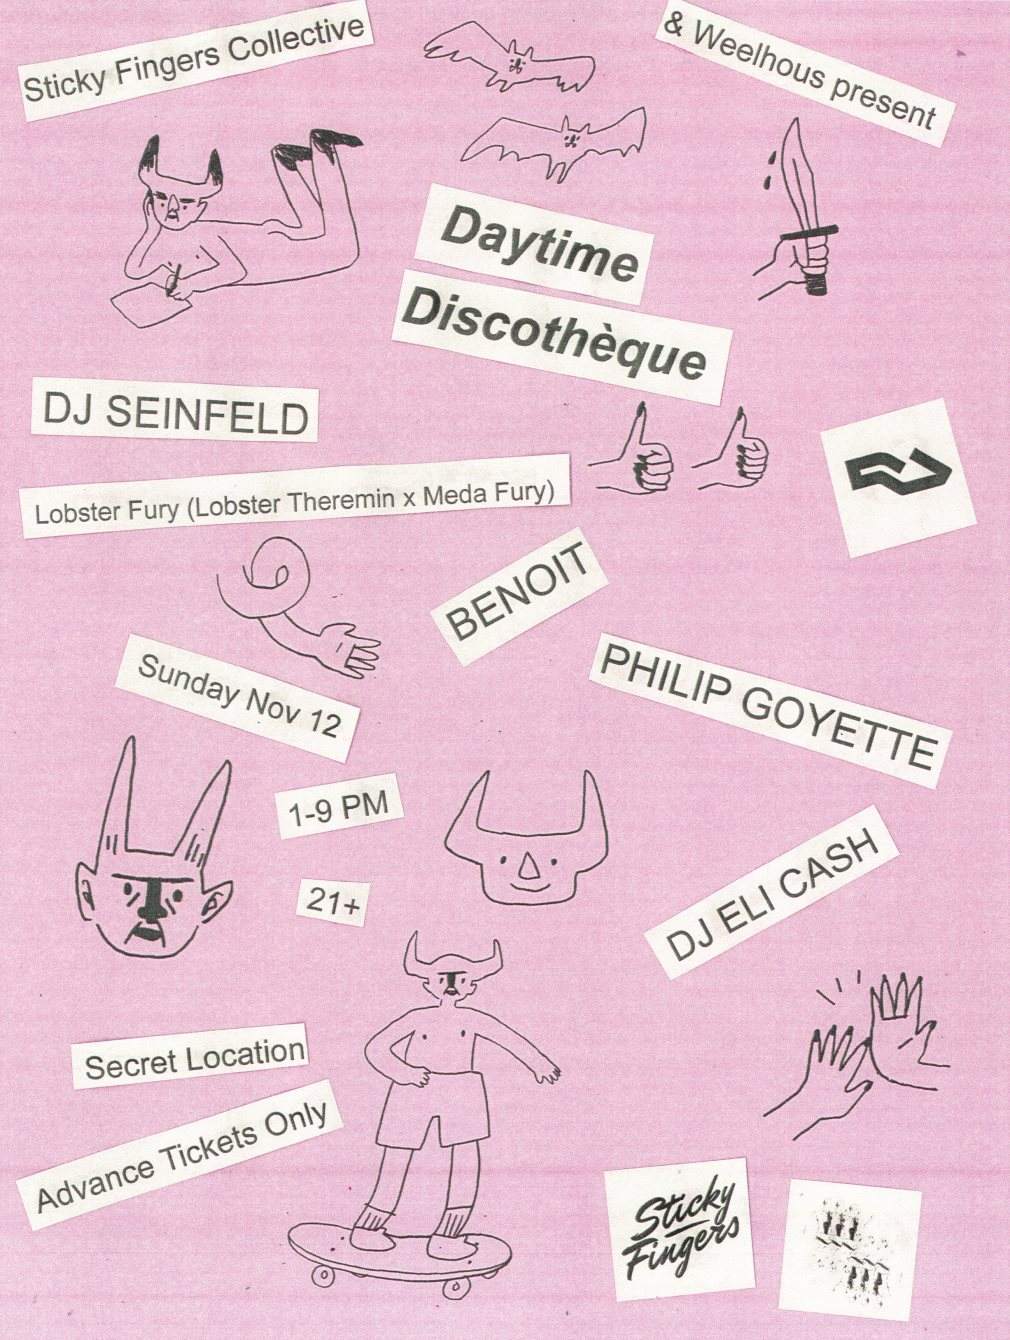 Daytime Discothèque Feat. Dj Seinfeld with Benoit, Philip Goyette, Dj Eli Cash - Página frontal